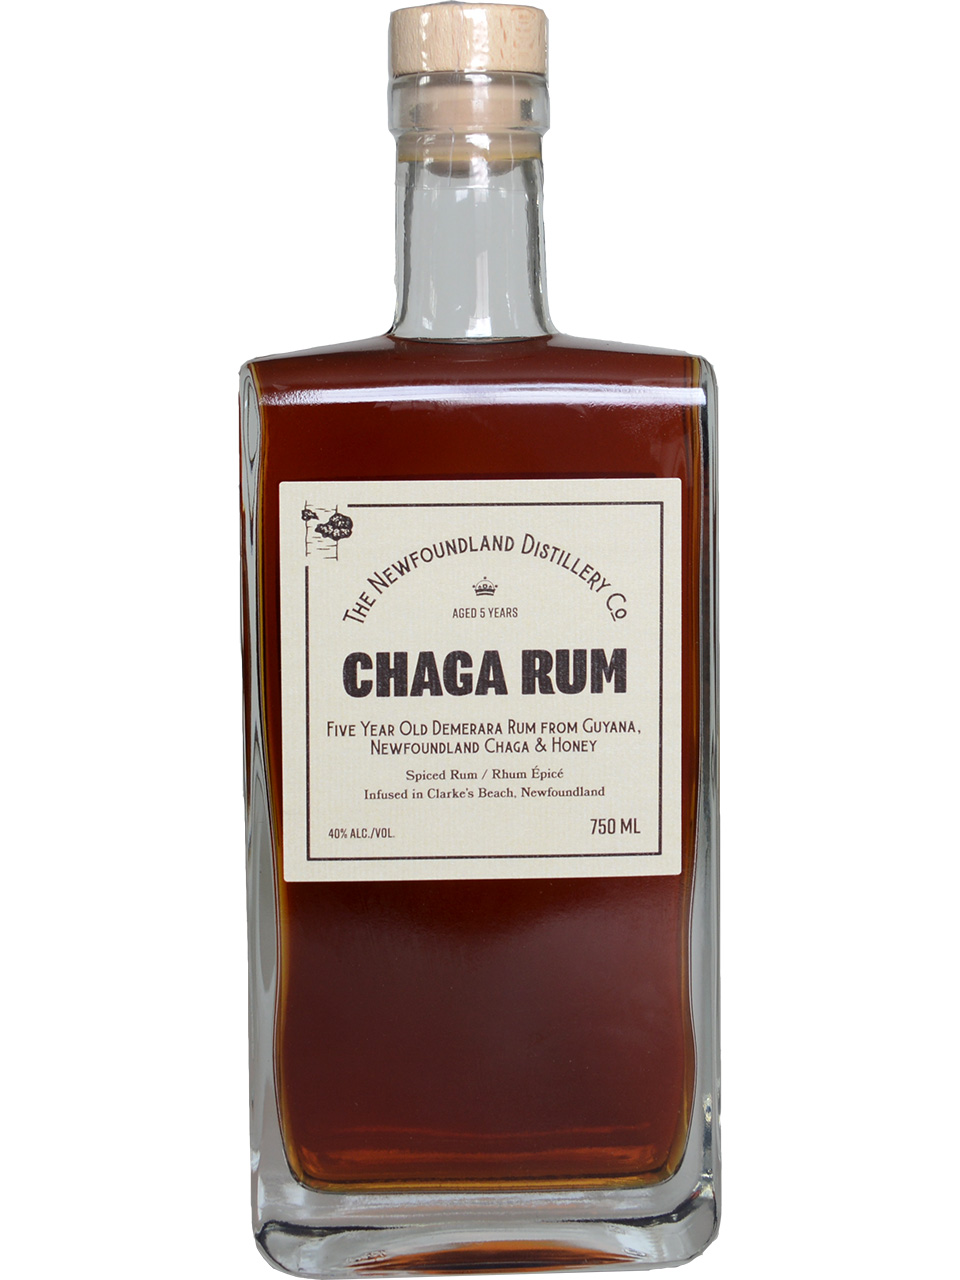 The Newfoundland Distillery Co Chaga Rum